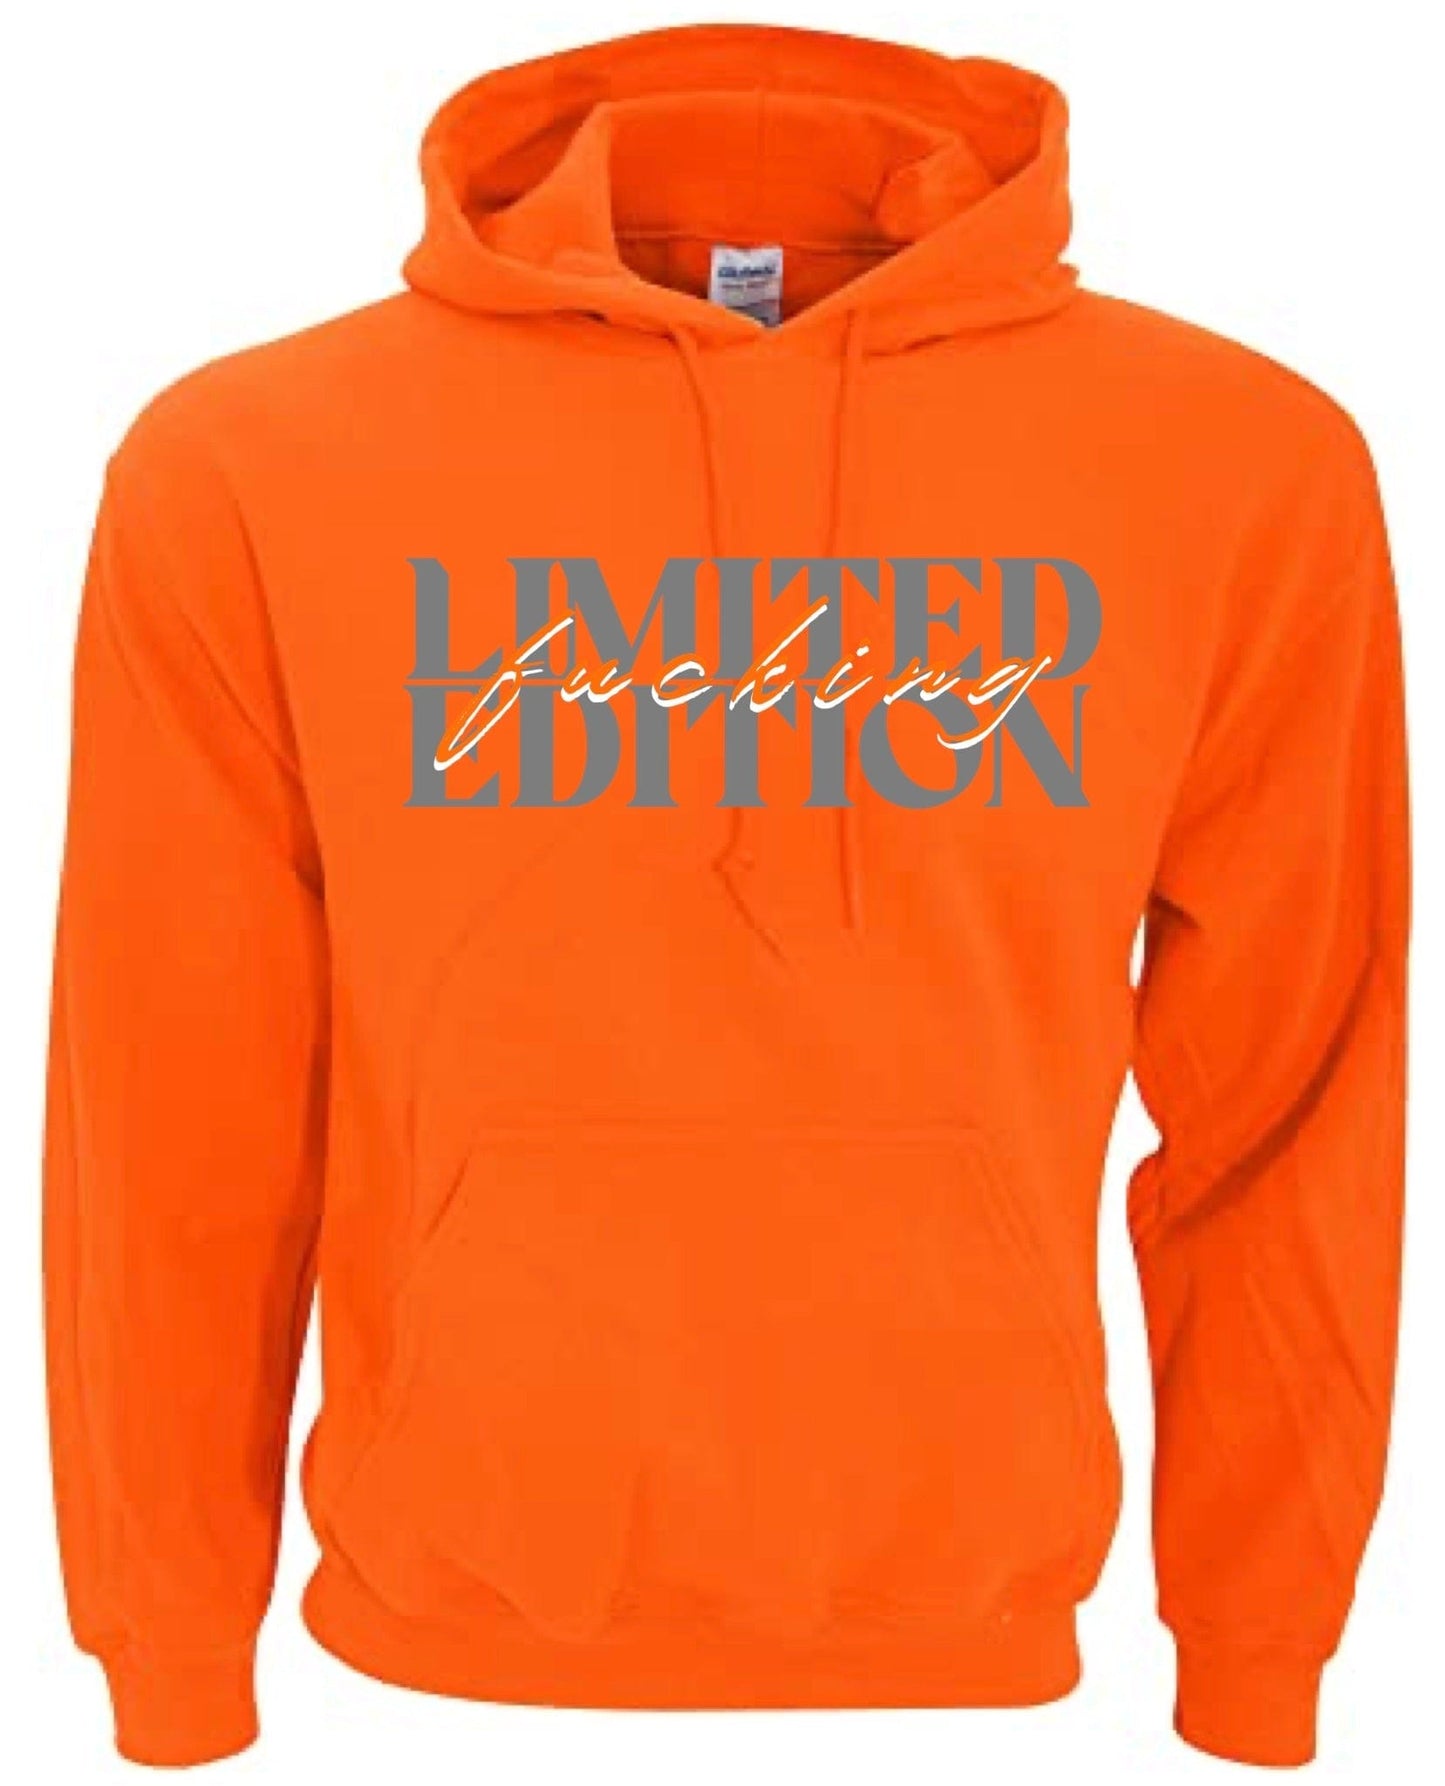 InsensitiviTees Shirts S / Orange Limited Fucking Edition Hoodie